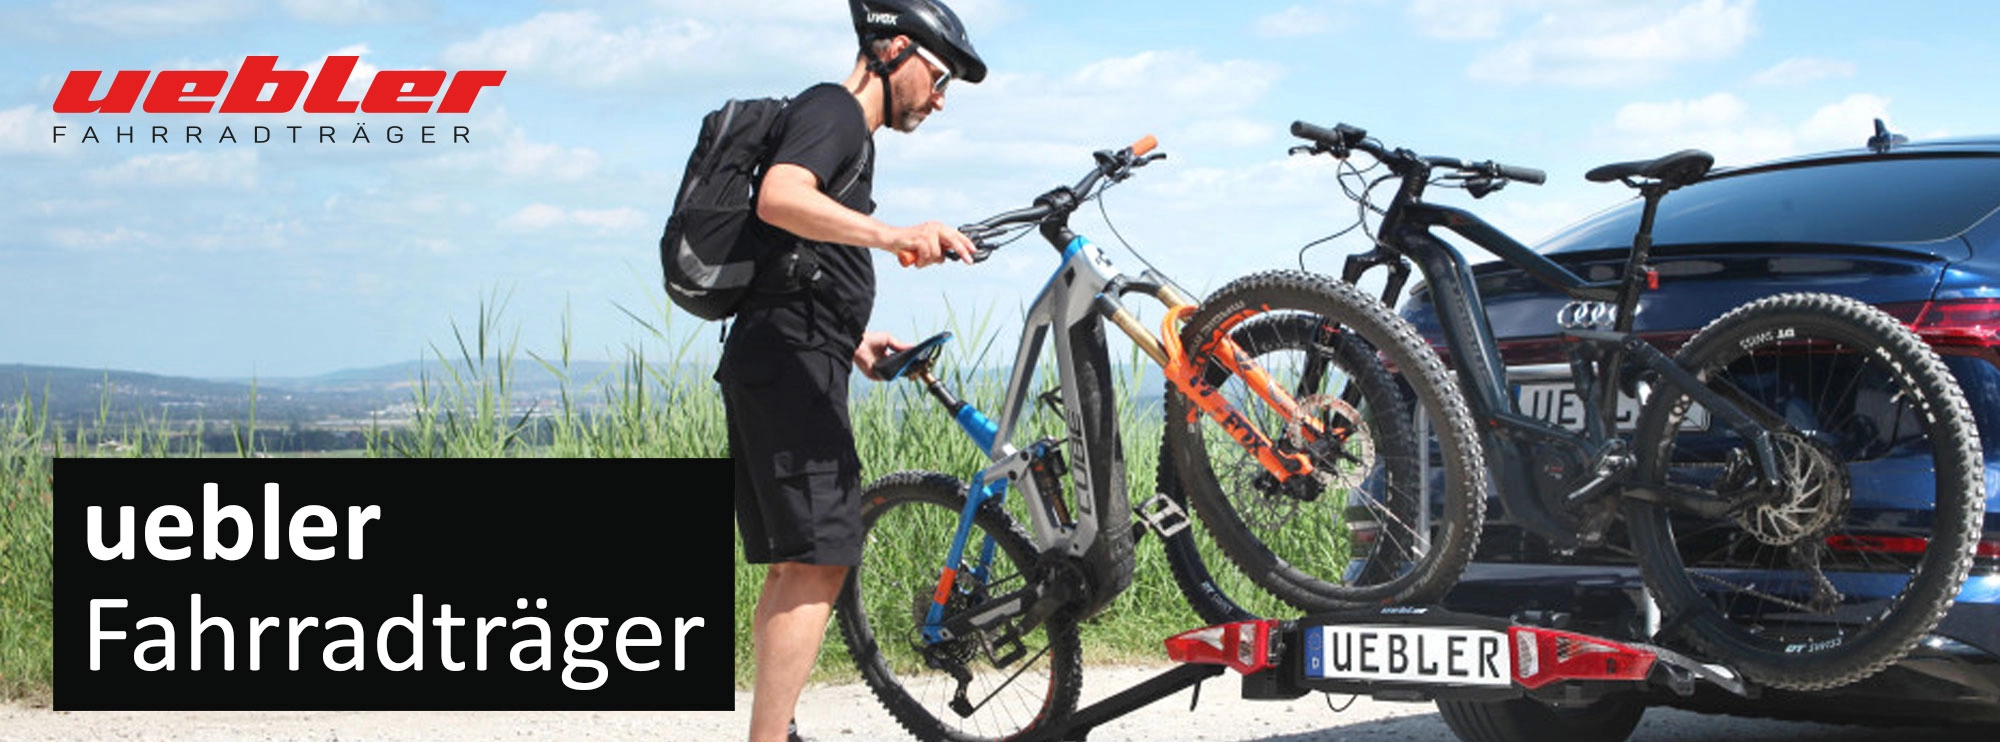 Header uebler fahrradtraeger rosier onlineshop